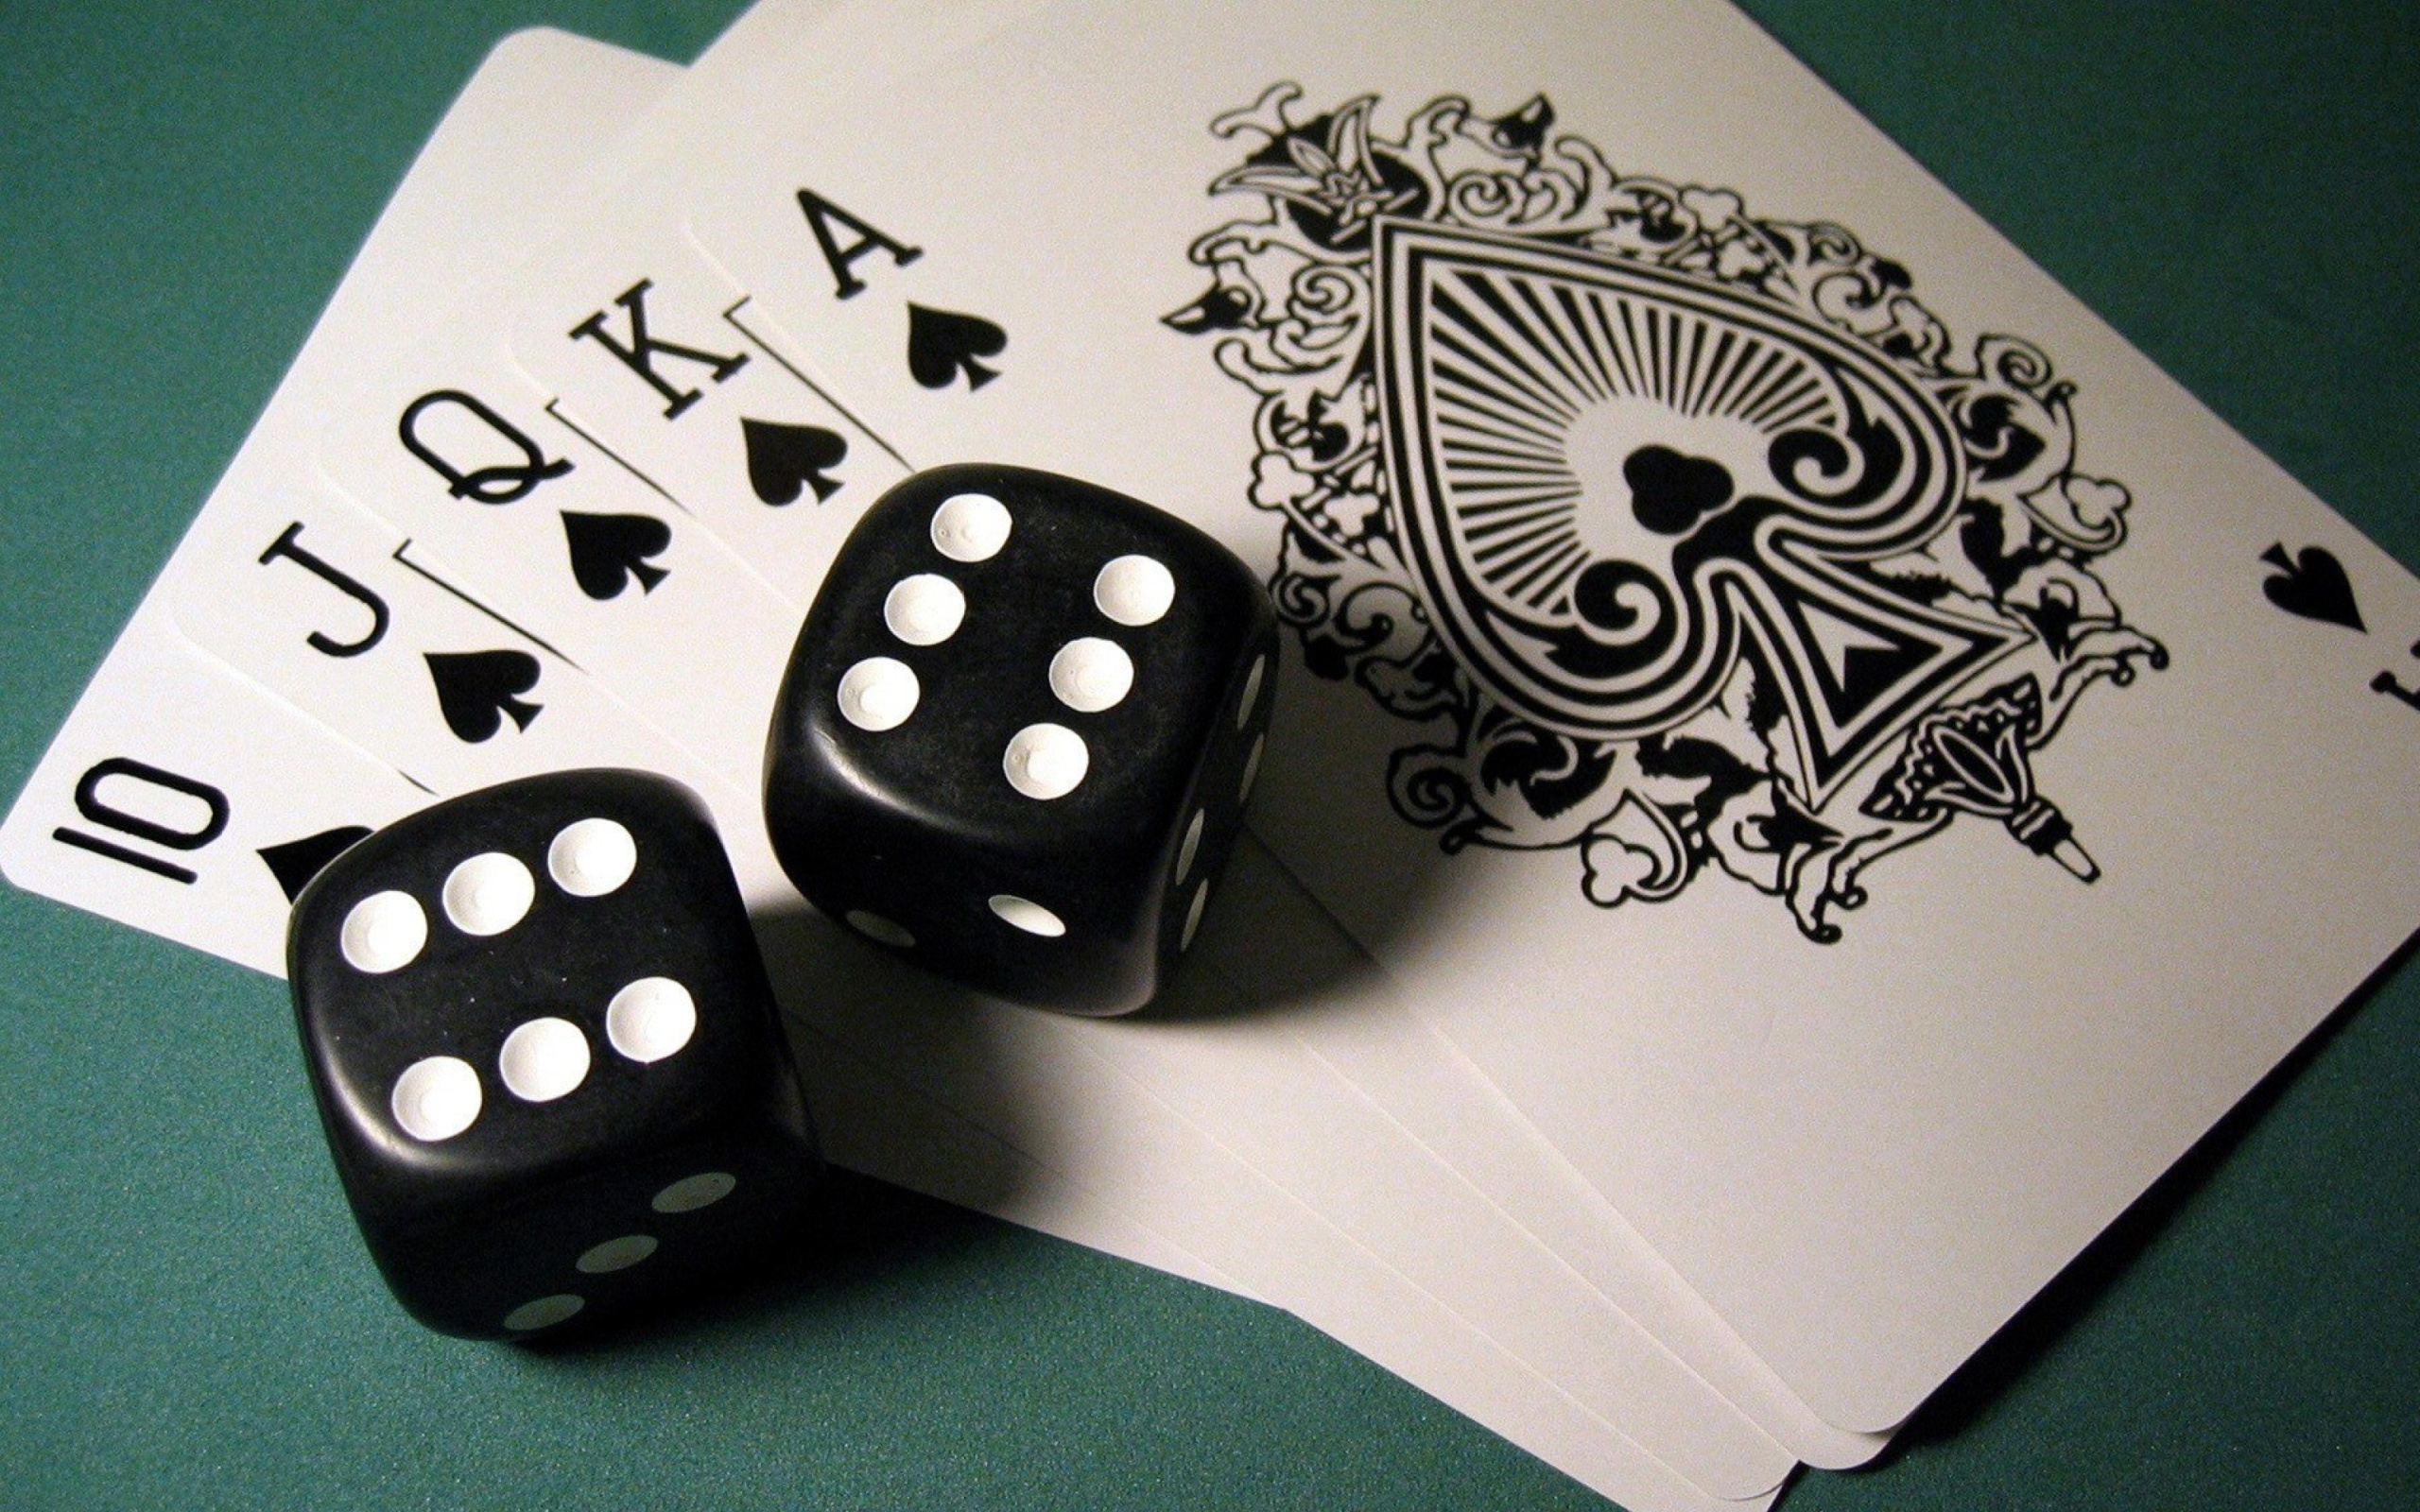 Das Gambling Dice and Cards Wallpaper 2560x1600